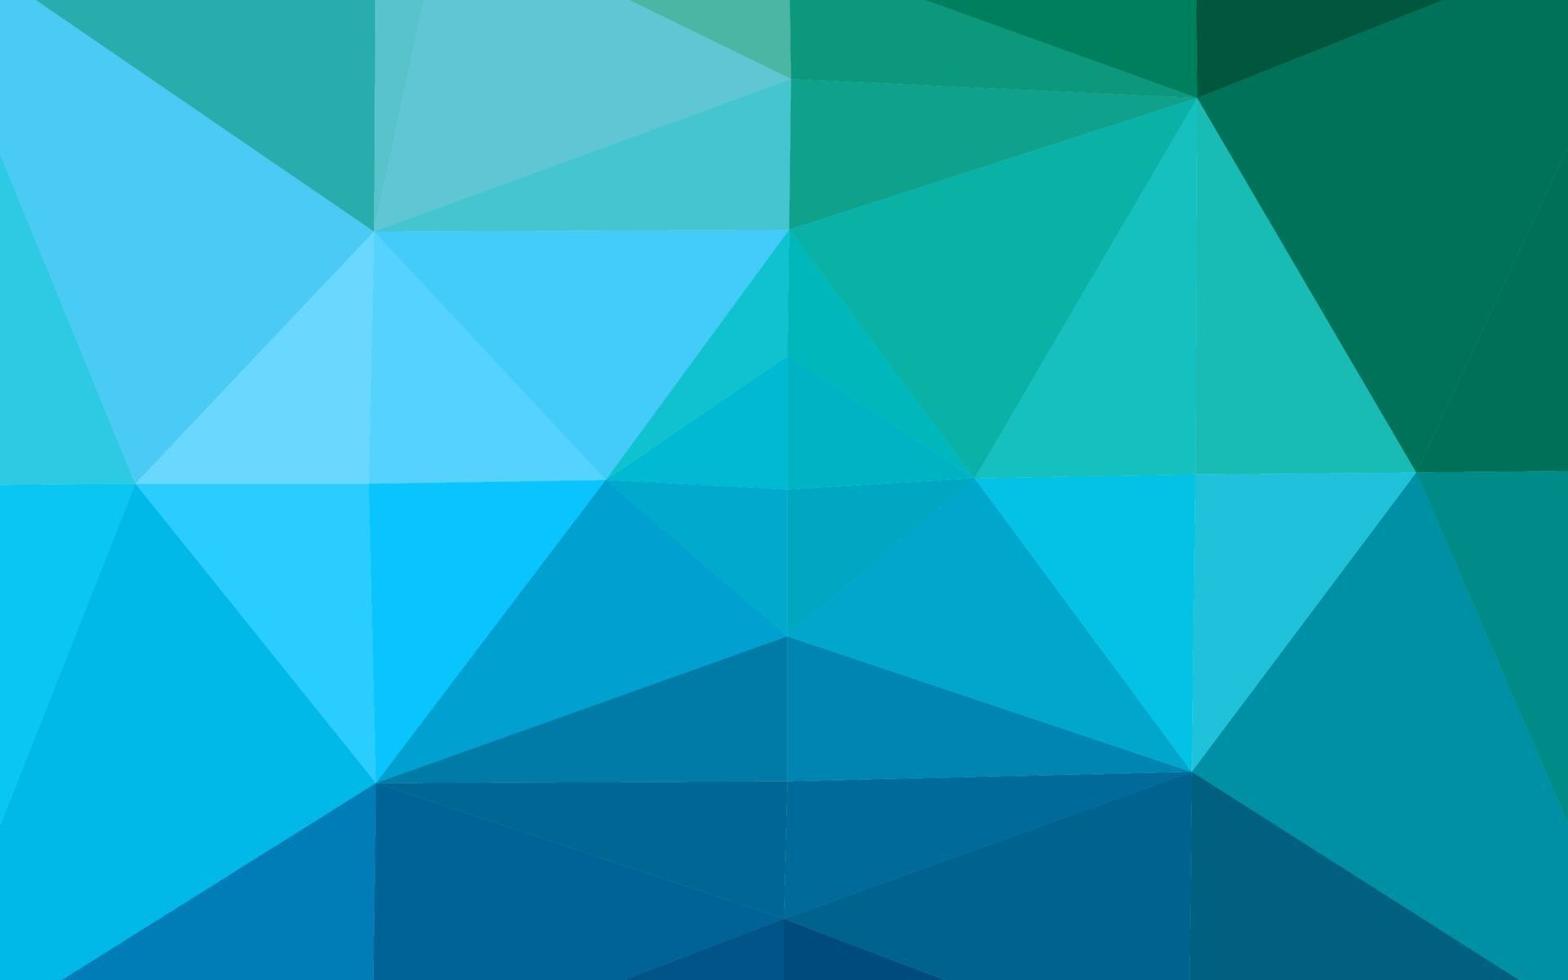 Light Blue, Green vector blurry triangle pattern.